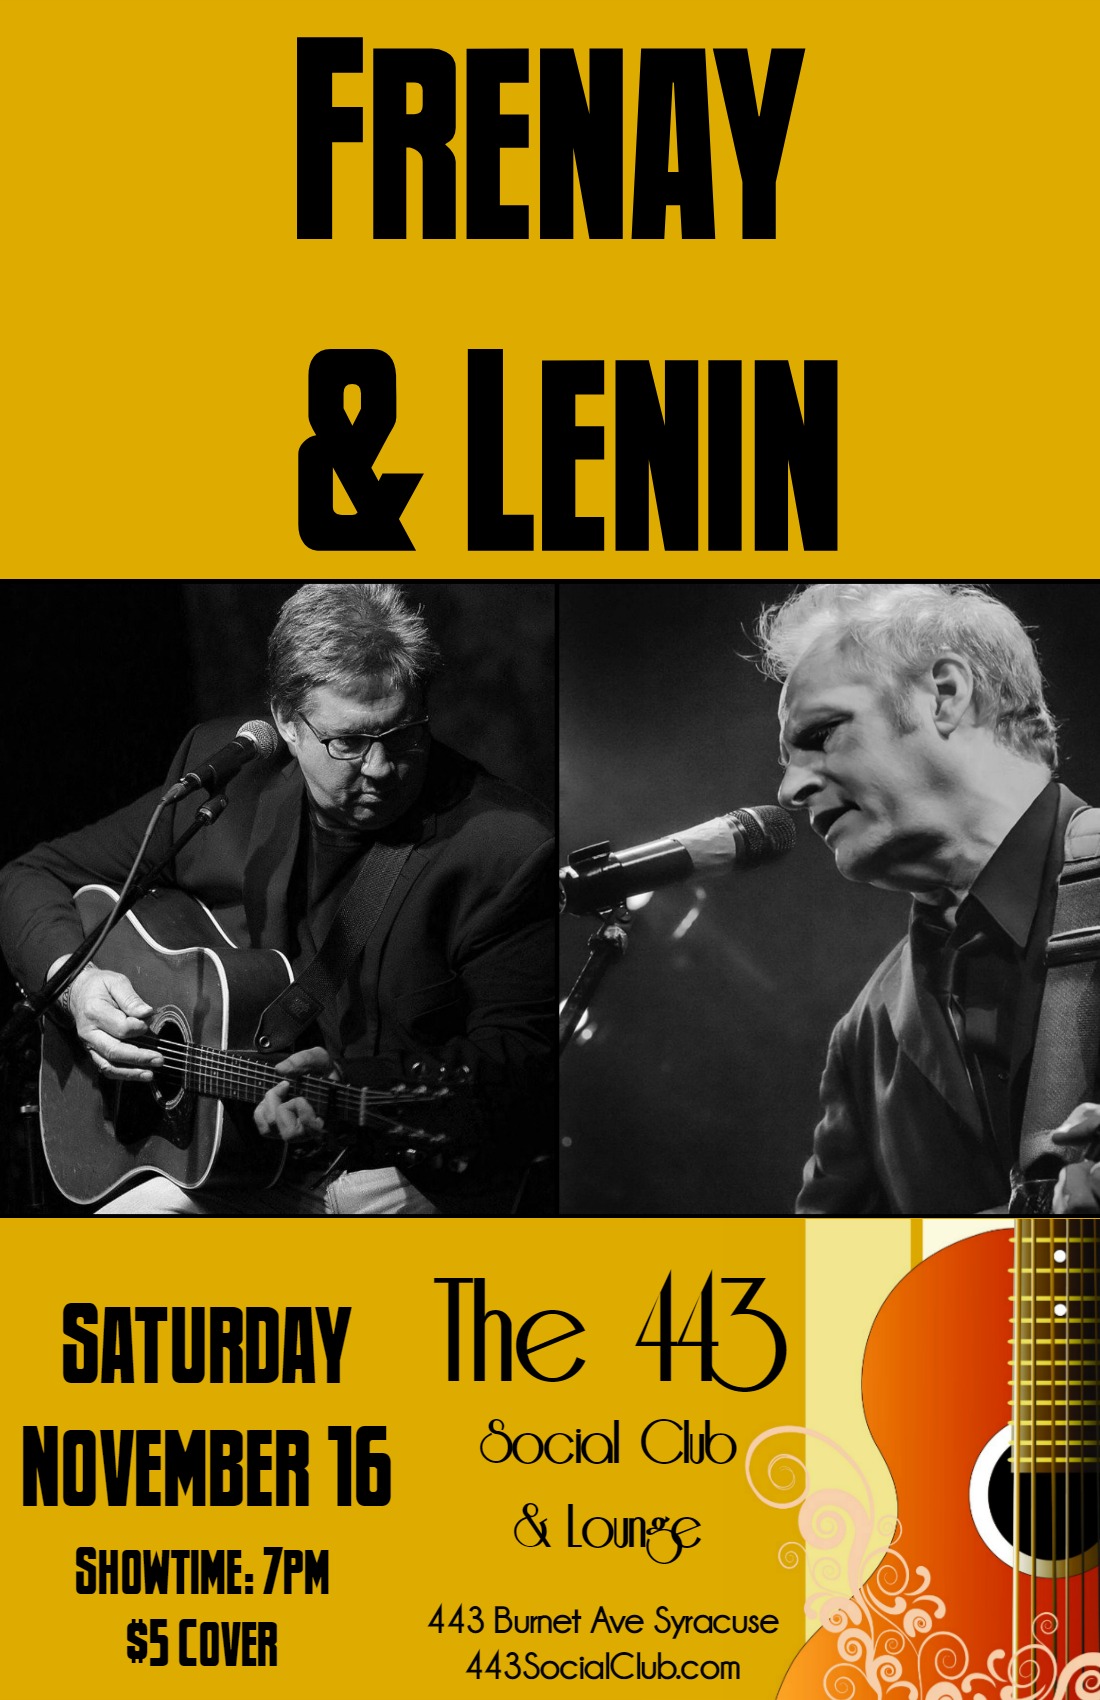 Frenay & Lenin - 11/16 - The 443 Social Club & Lounge